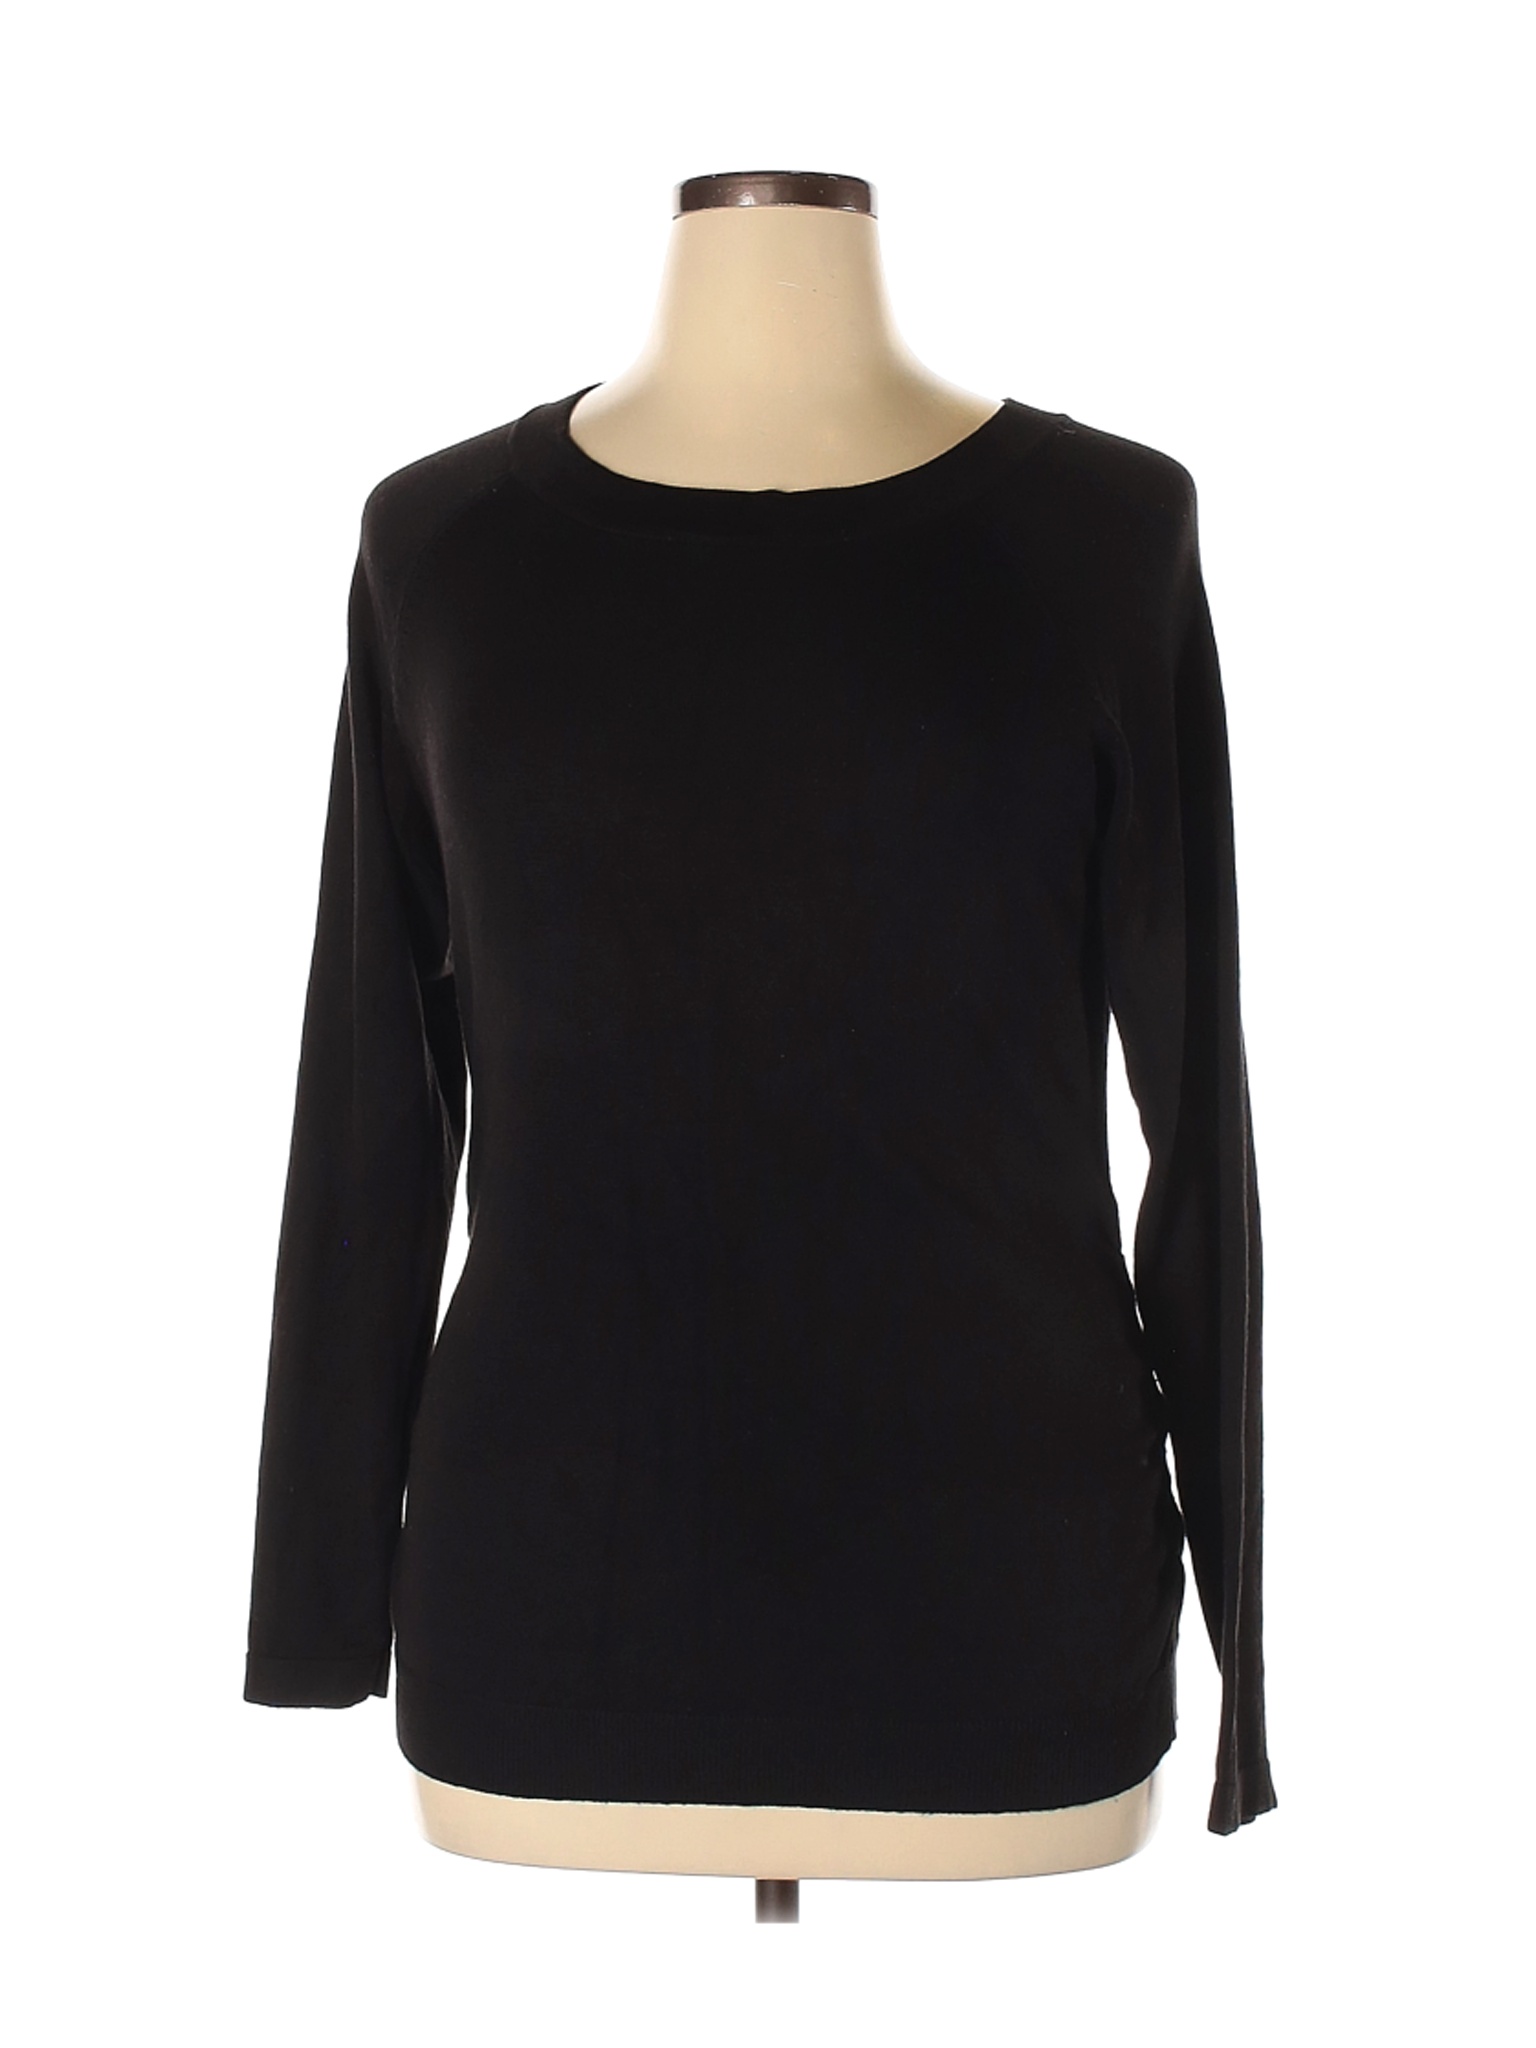 Maurices Women Black Long Sleeve Top XL | eBay